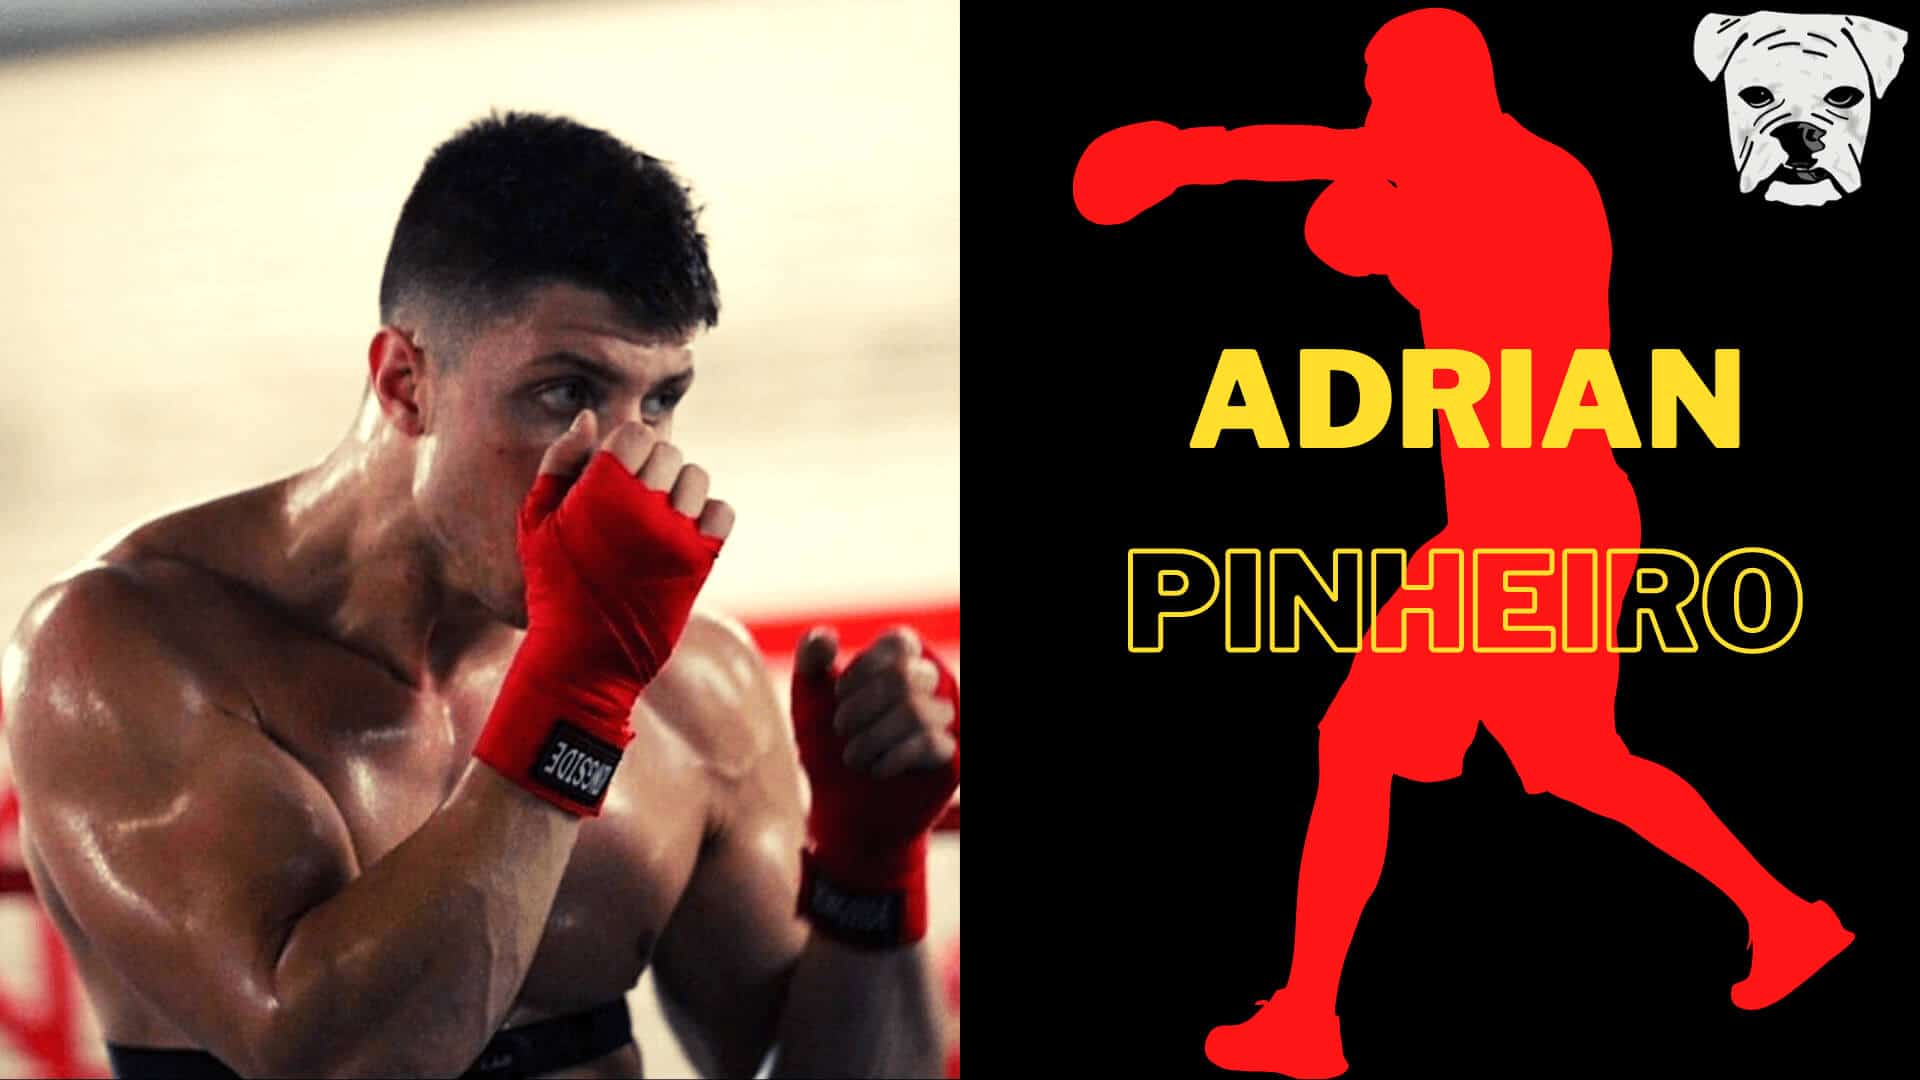 Adrian Pinheiro's journey to boxing